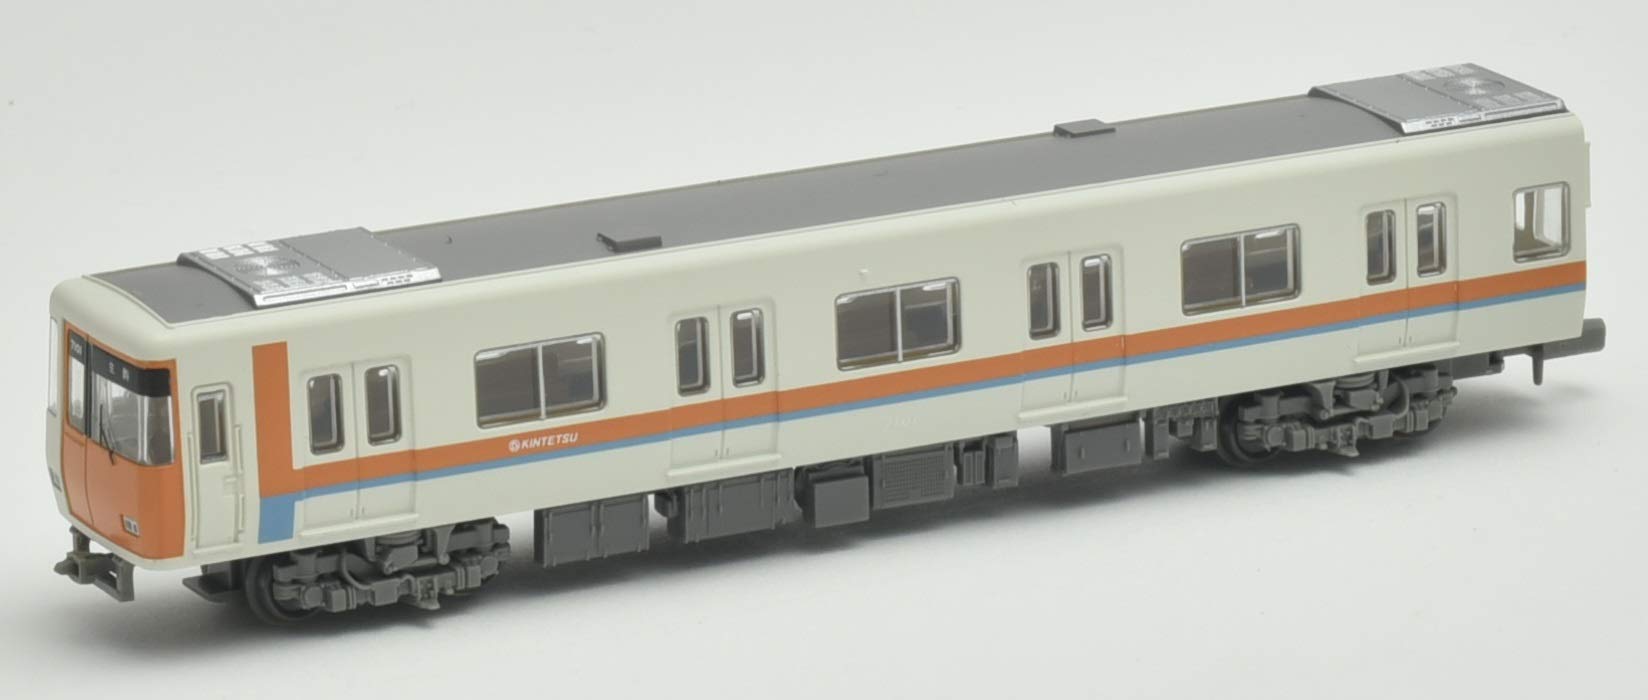 TOMYTEC - Kintetsu Railway Series 7000 6 Cars Set - N Scale